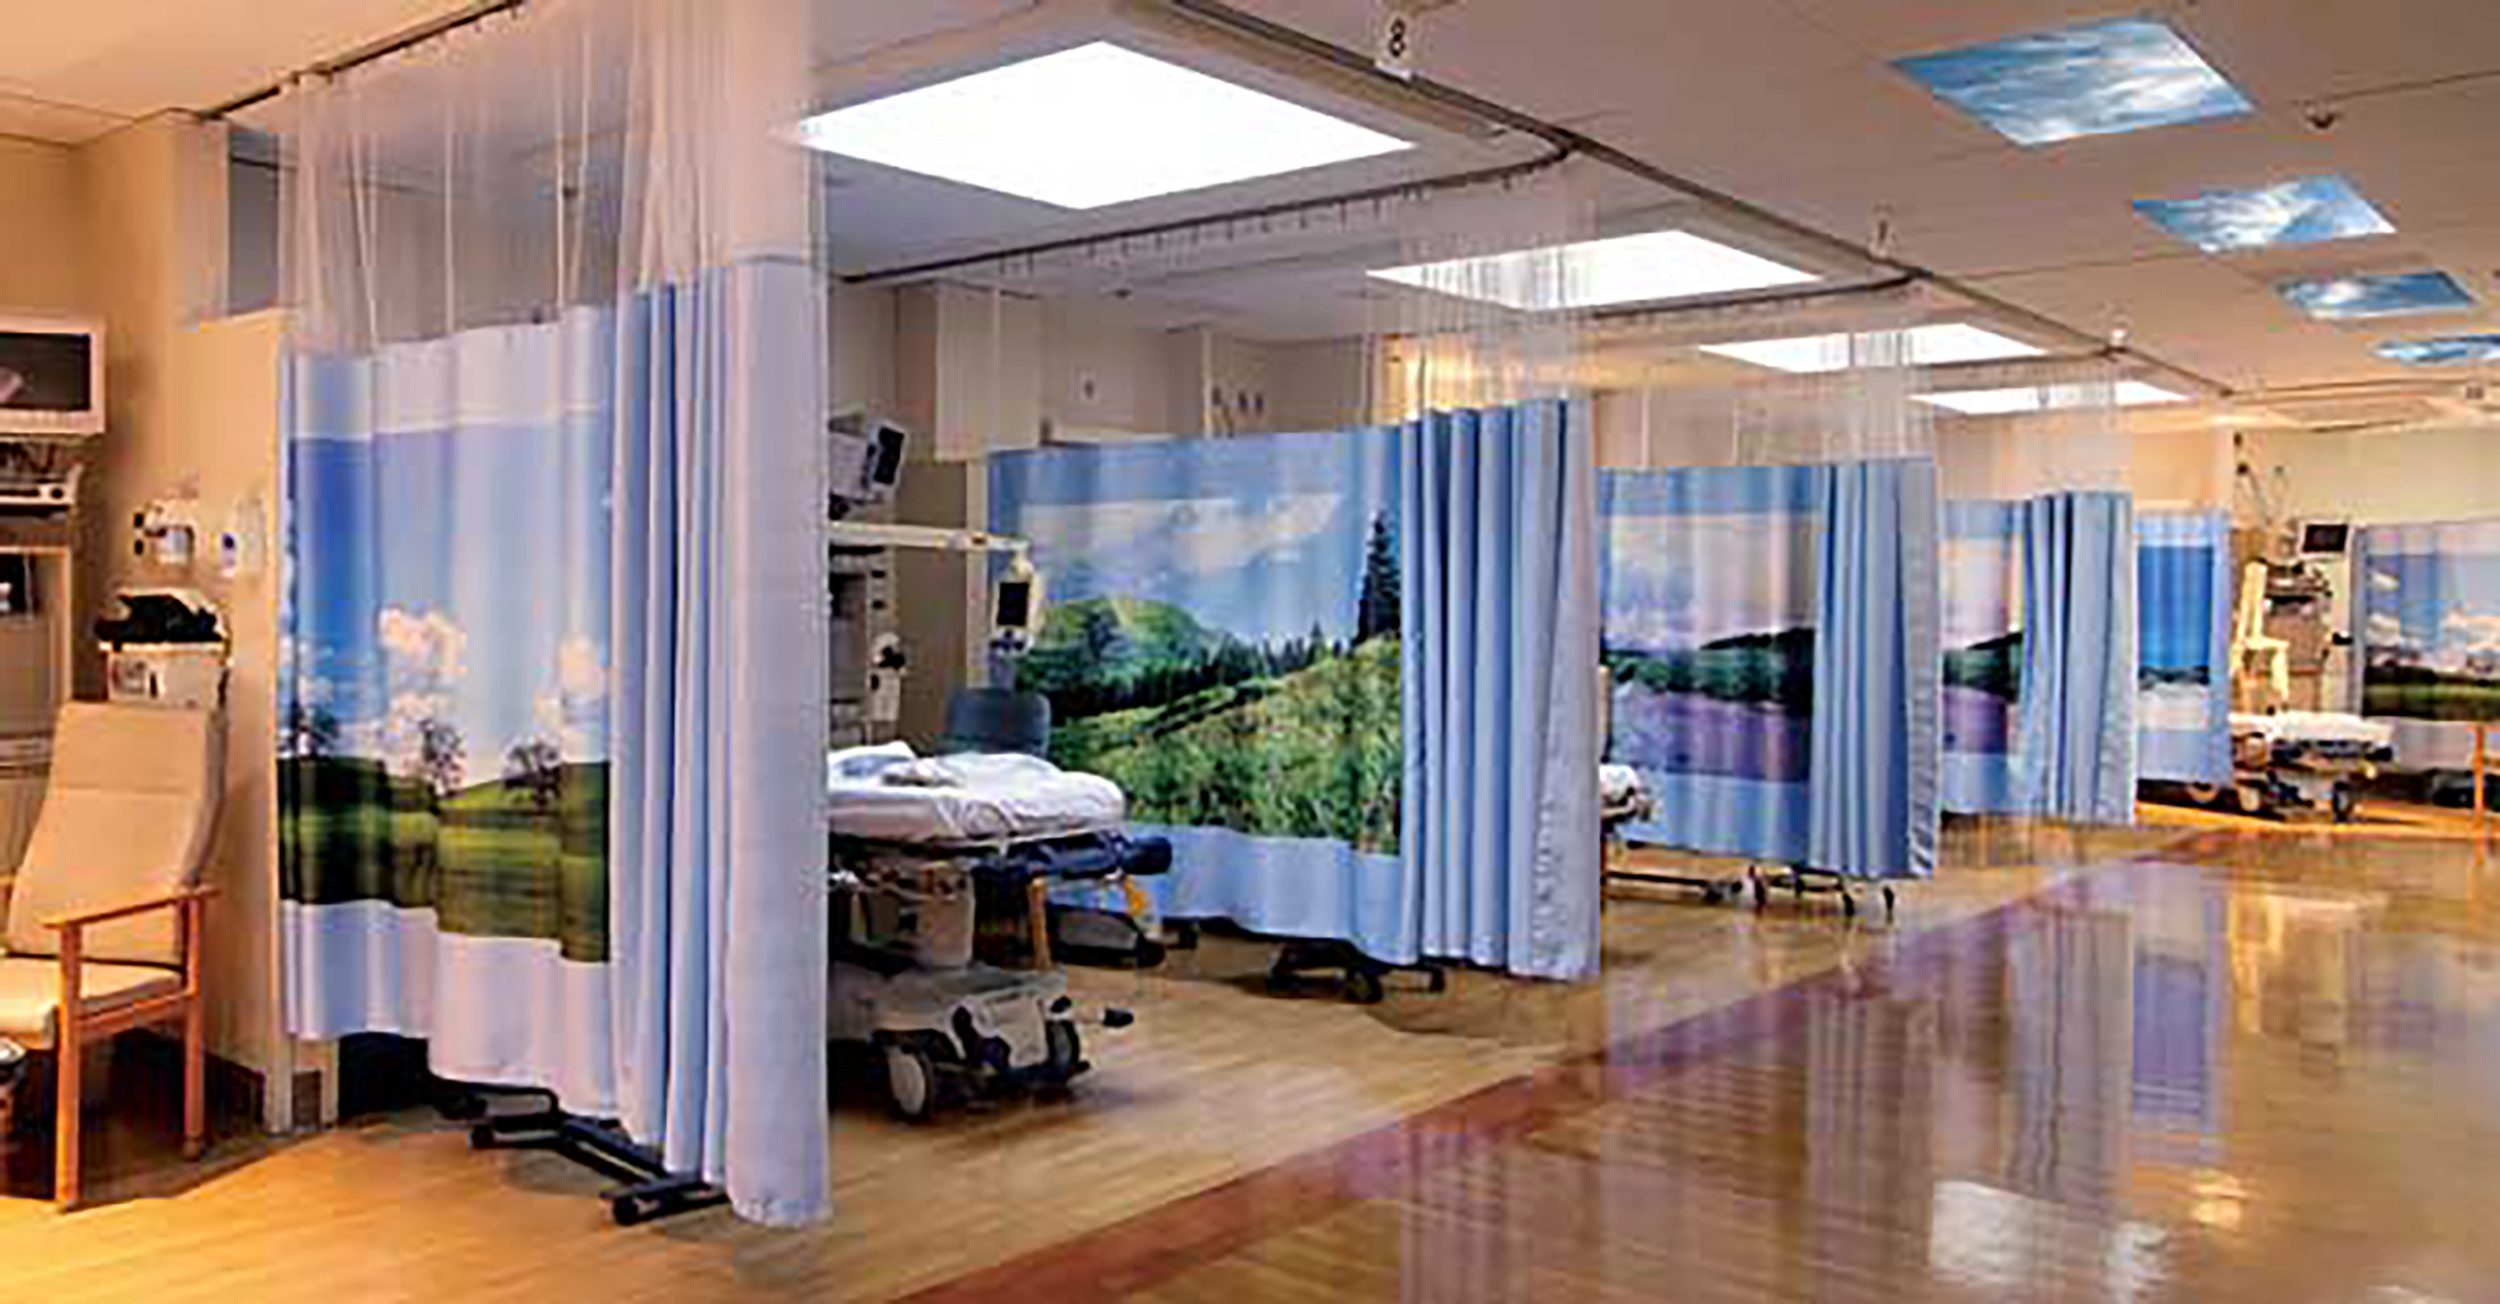 Beautiful hospital with a blue curtain